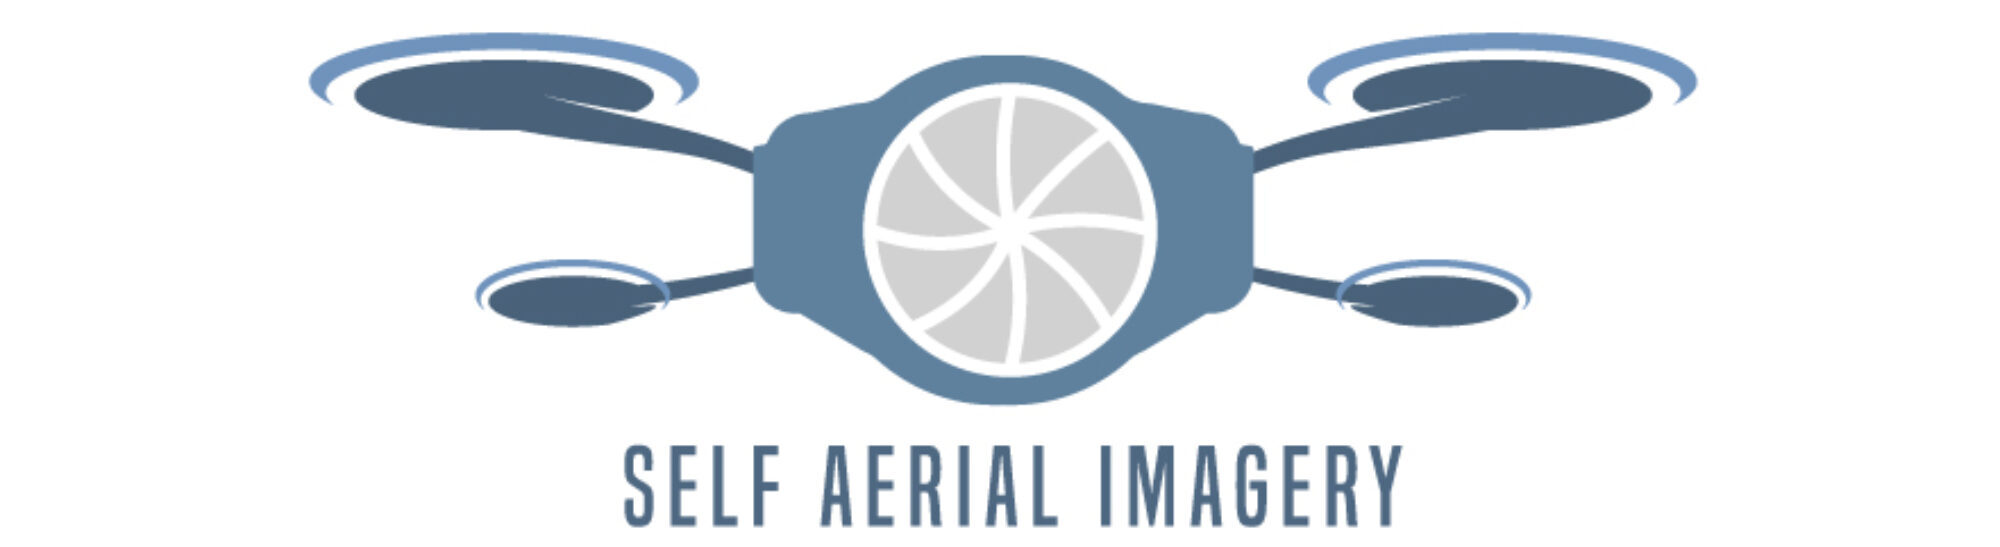 Self Aerial Imagery